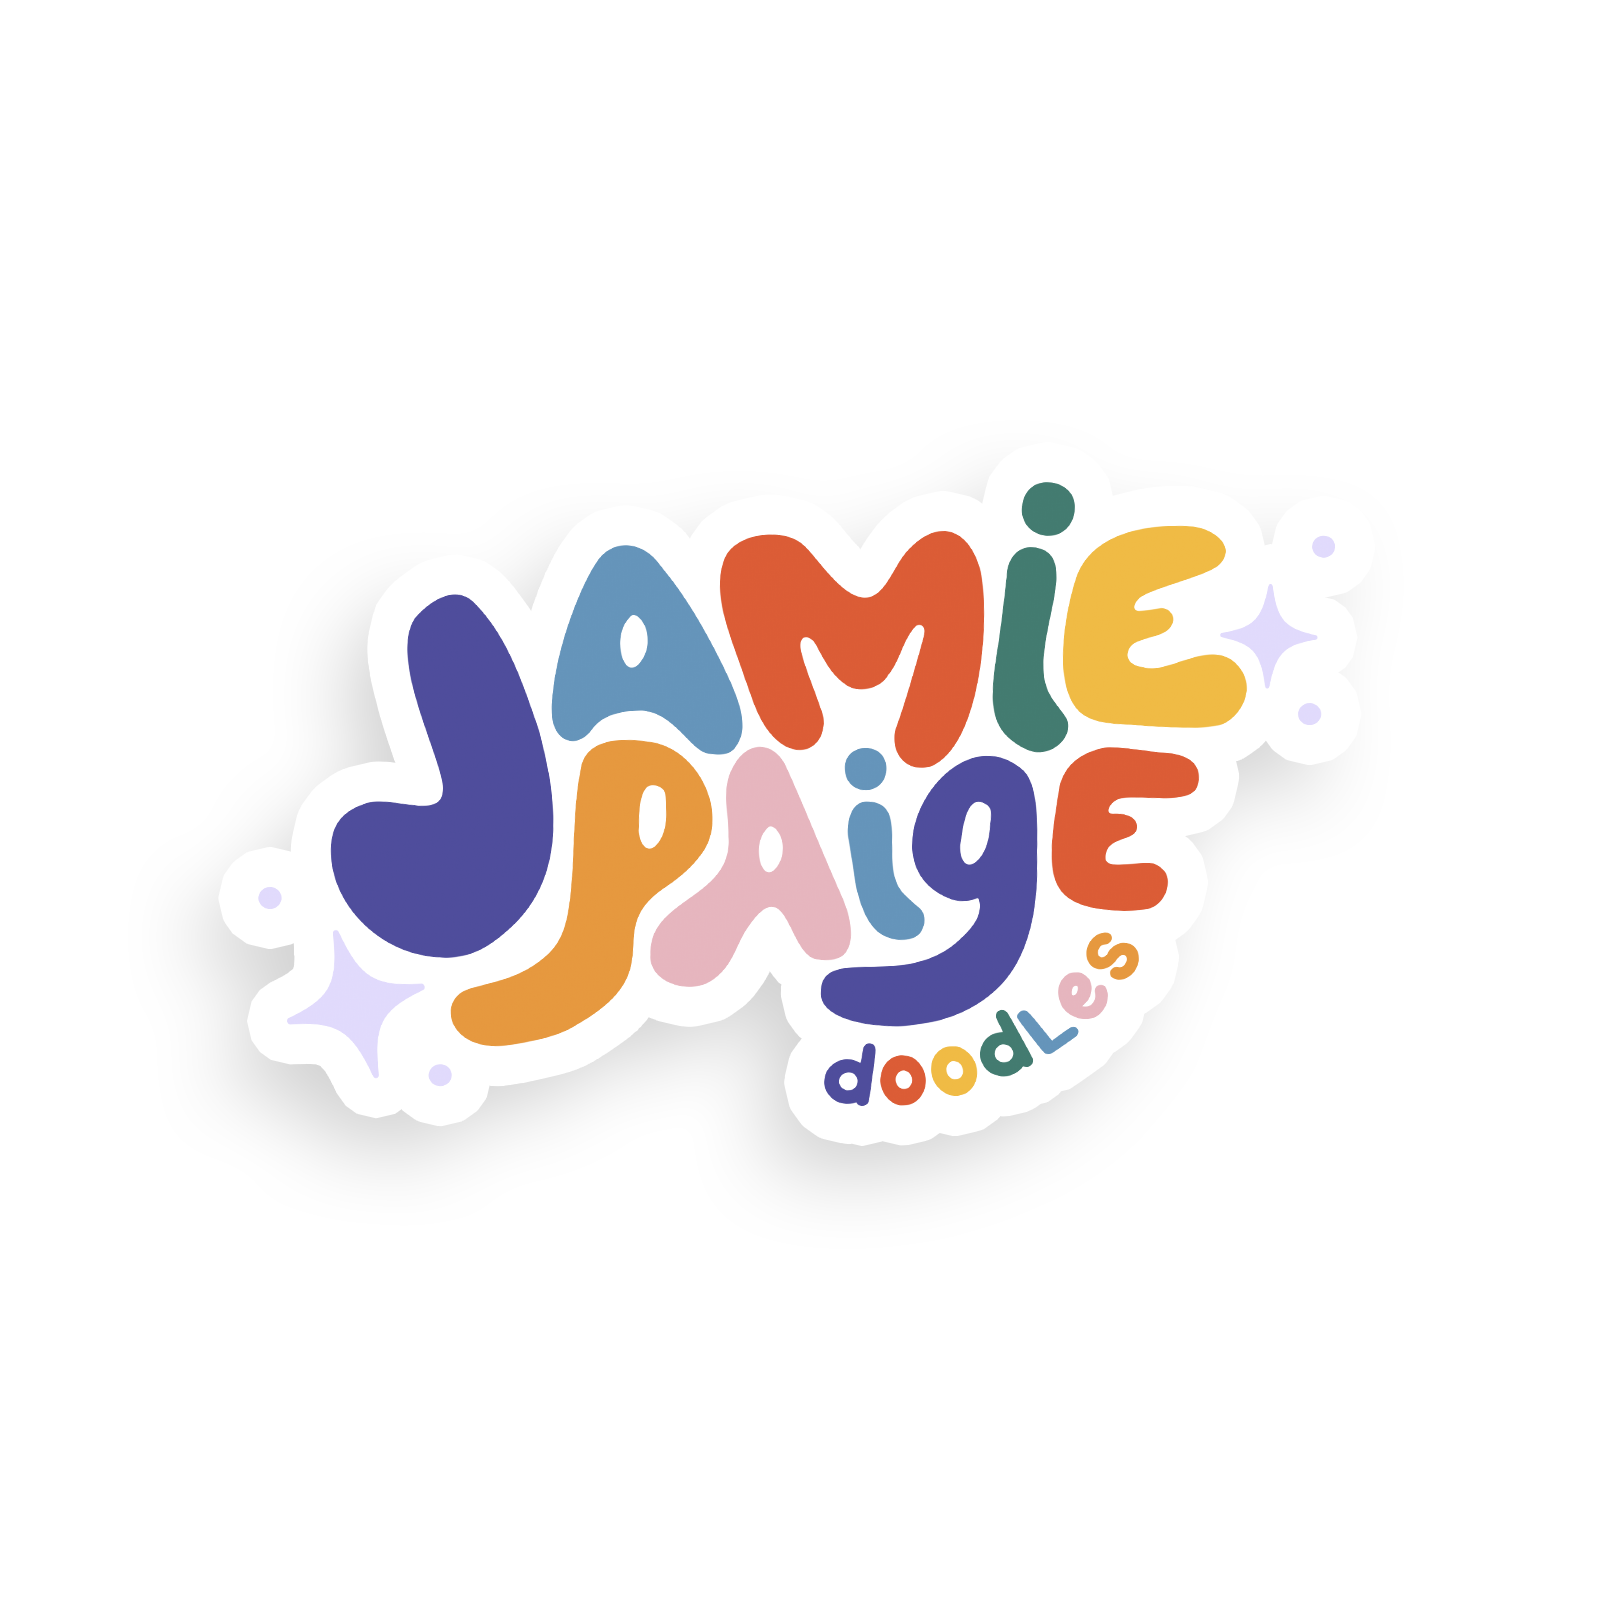 Jamie Paige Doodles Single Sticker